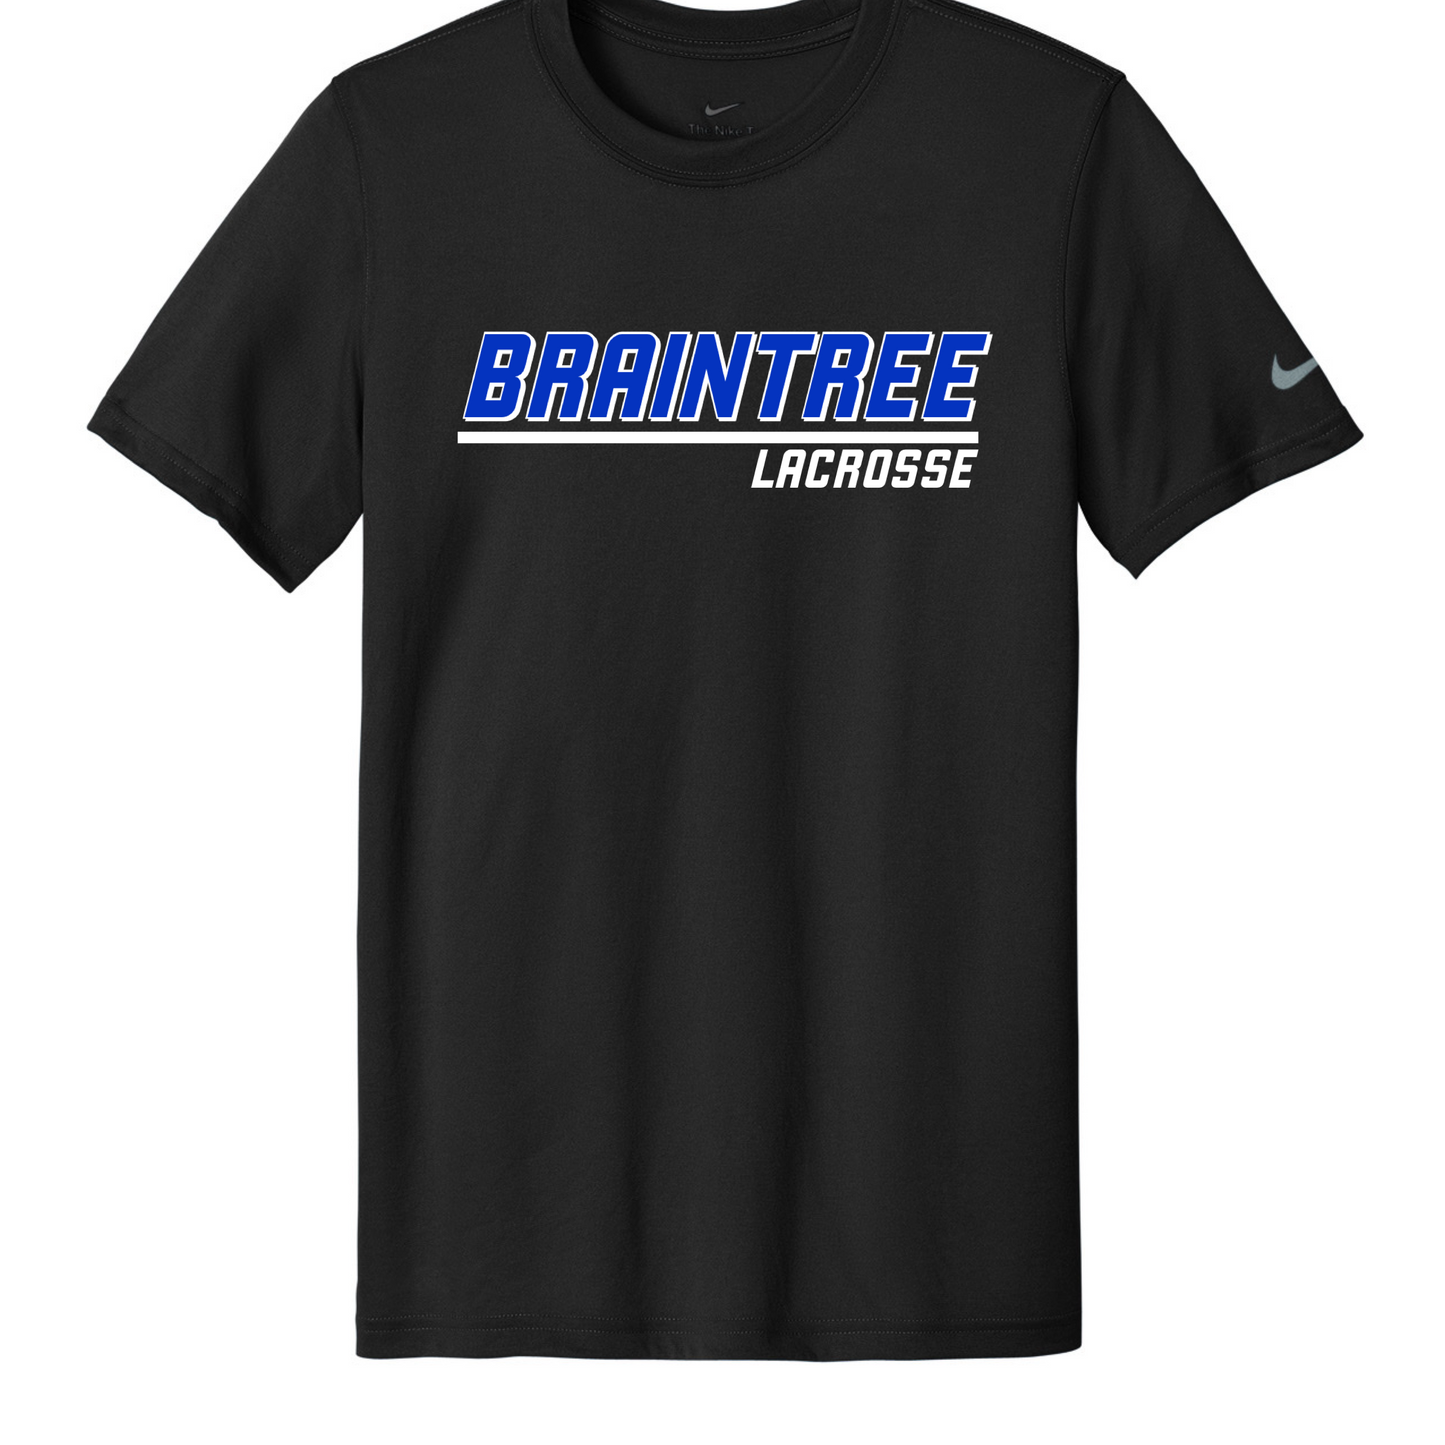 Braintree Lacrosse adult short sleeve shirt